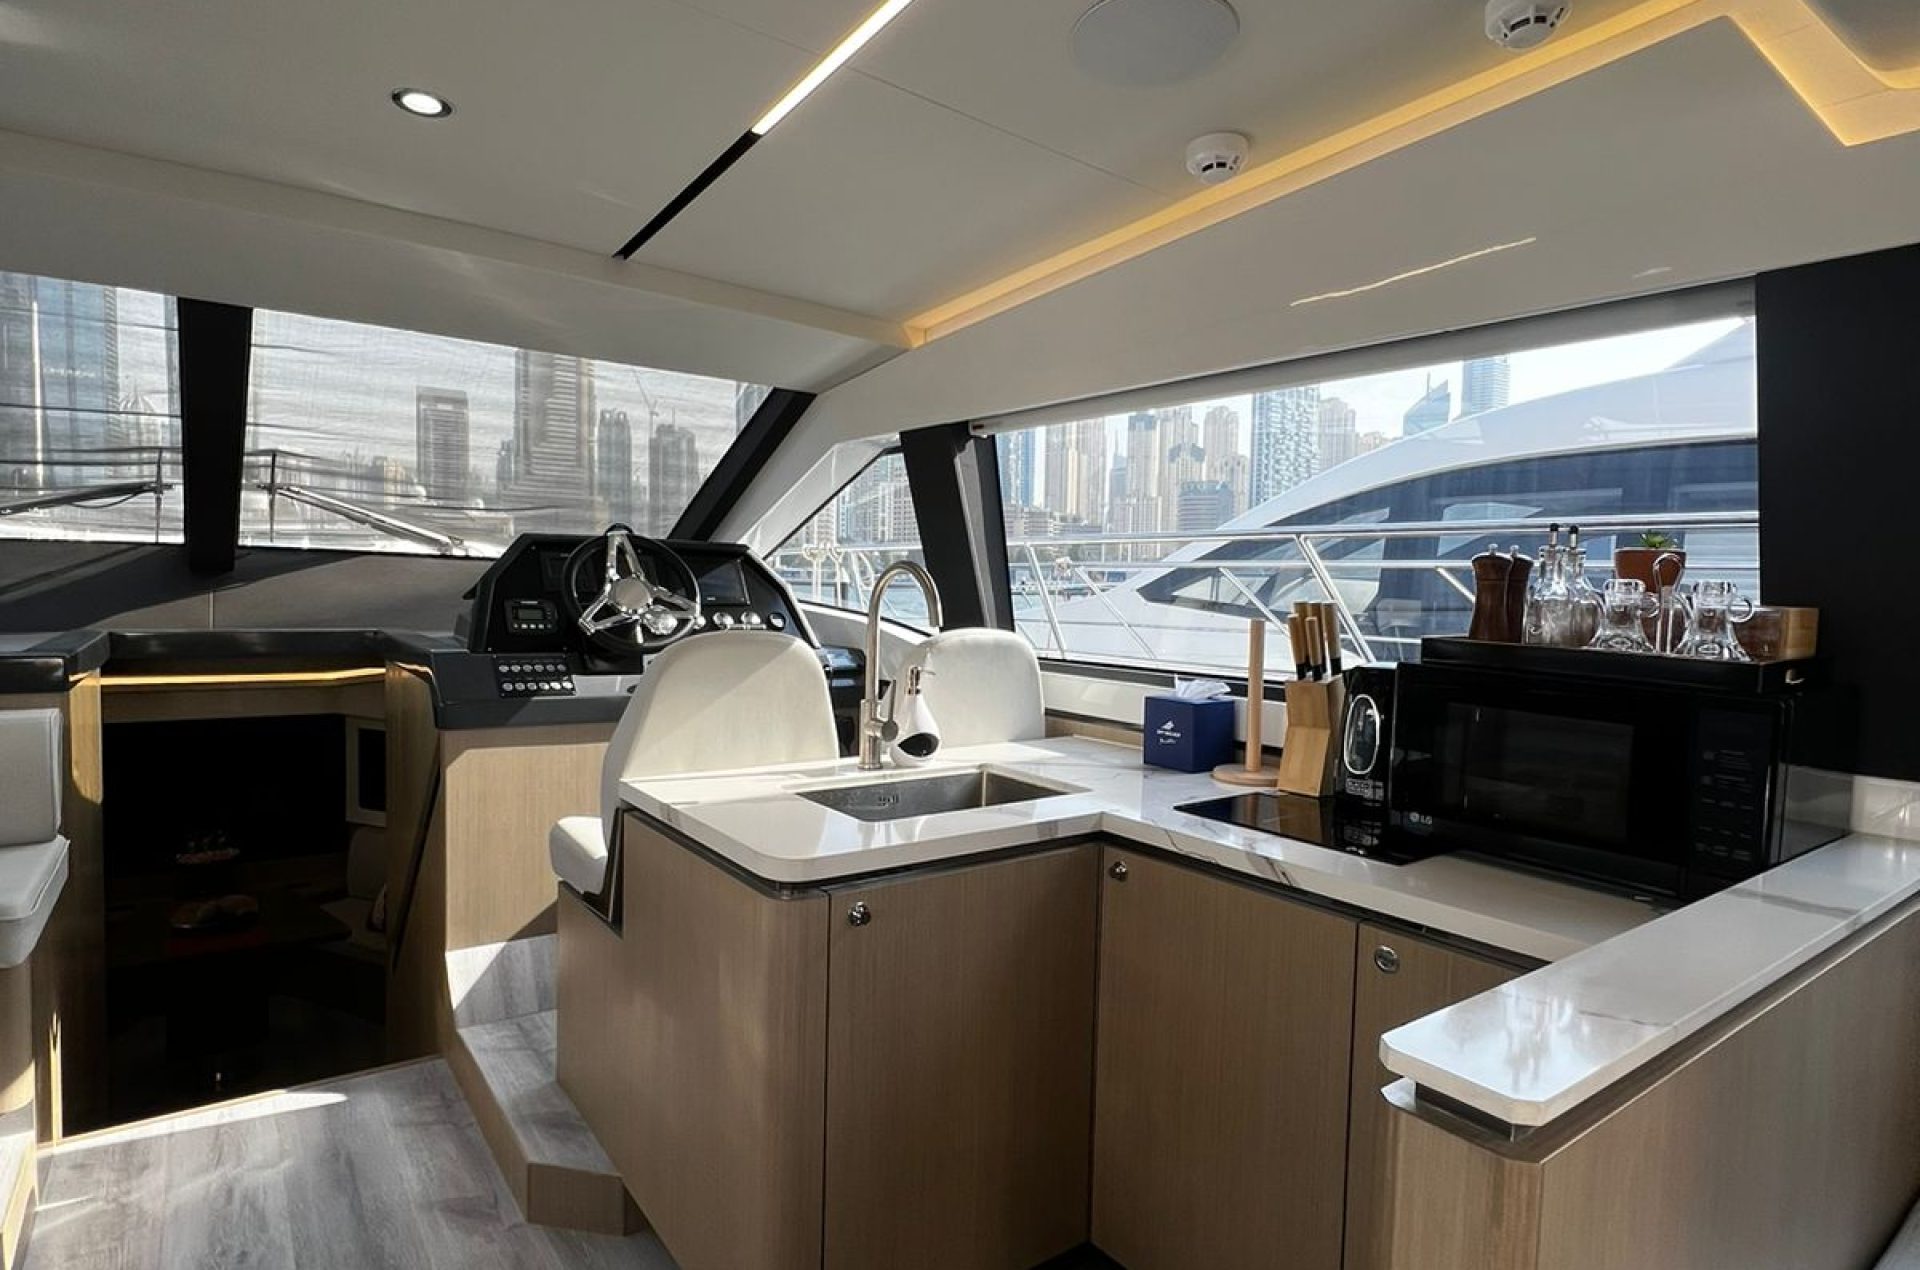 52 feet yacht in Dubai